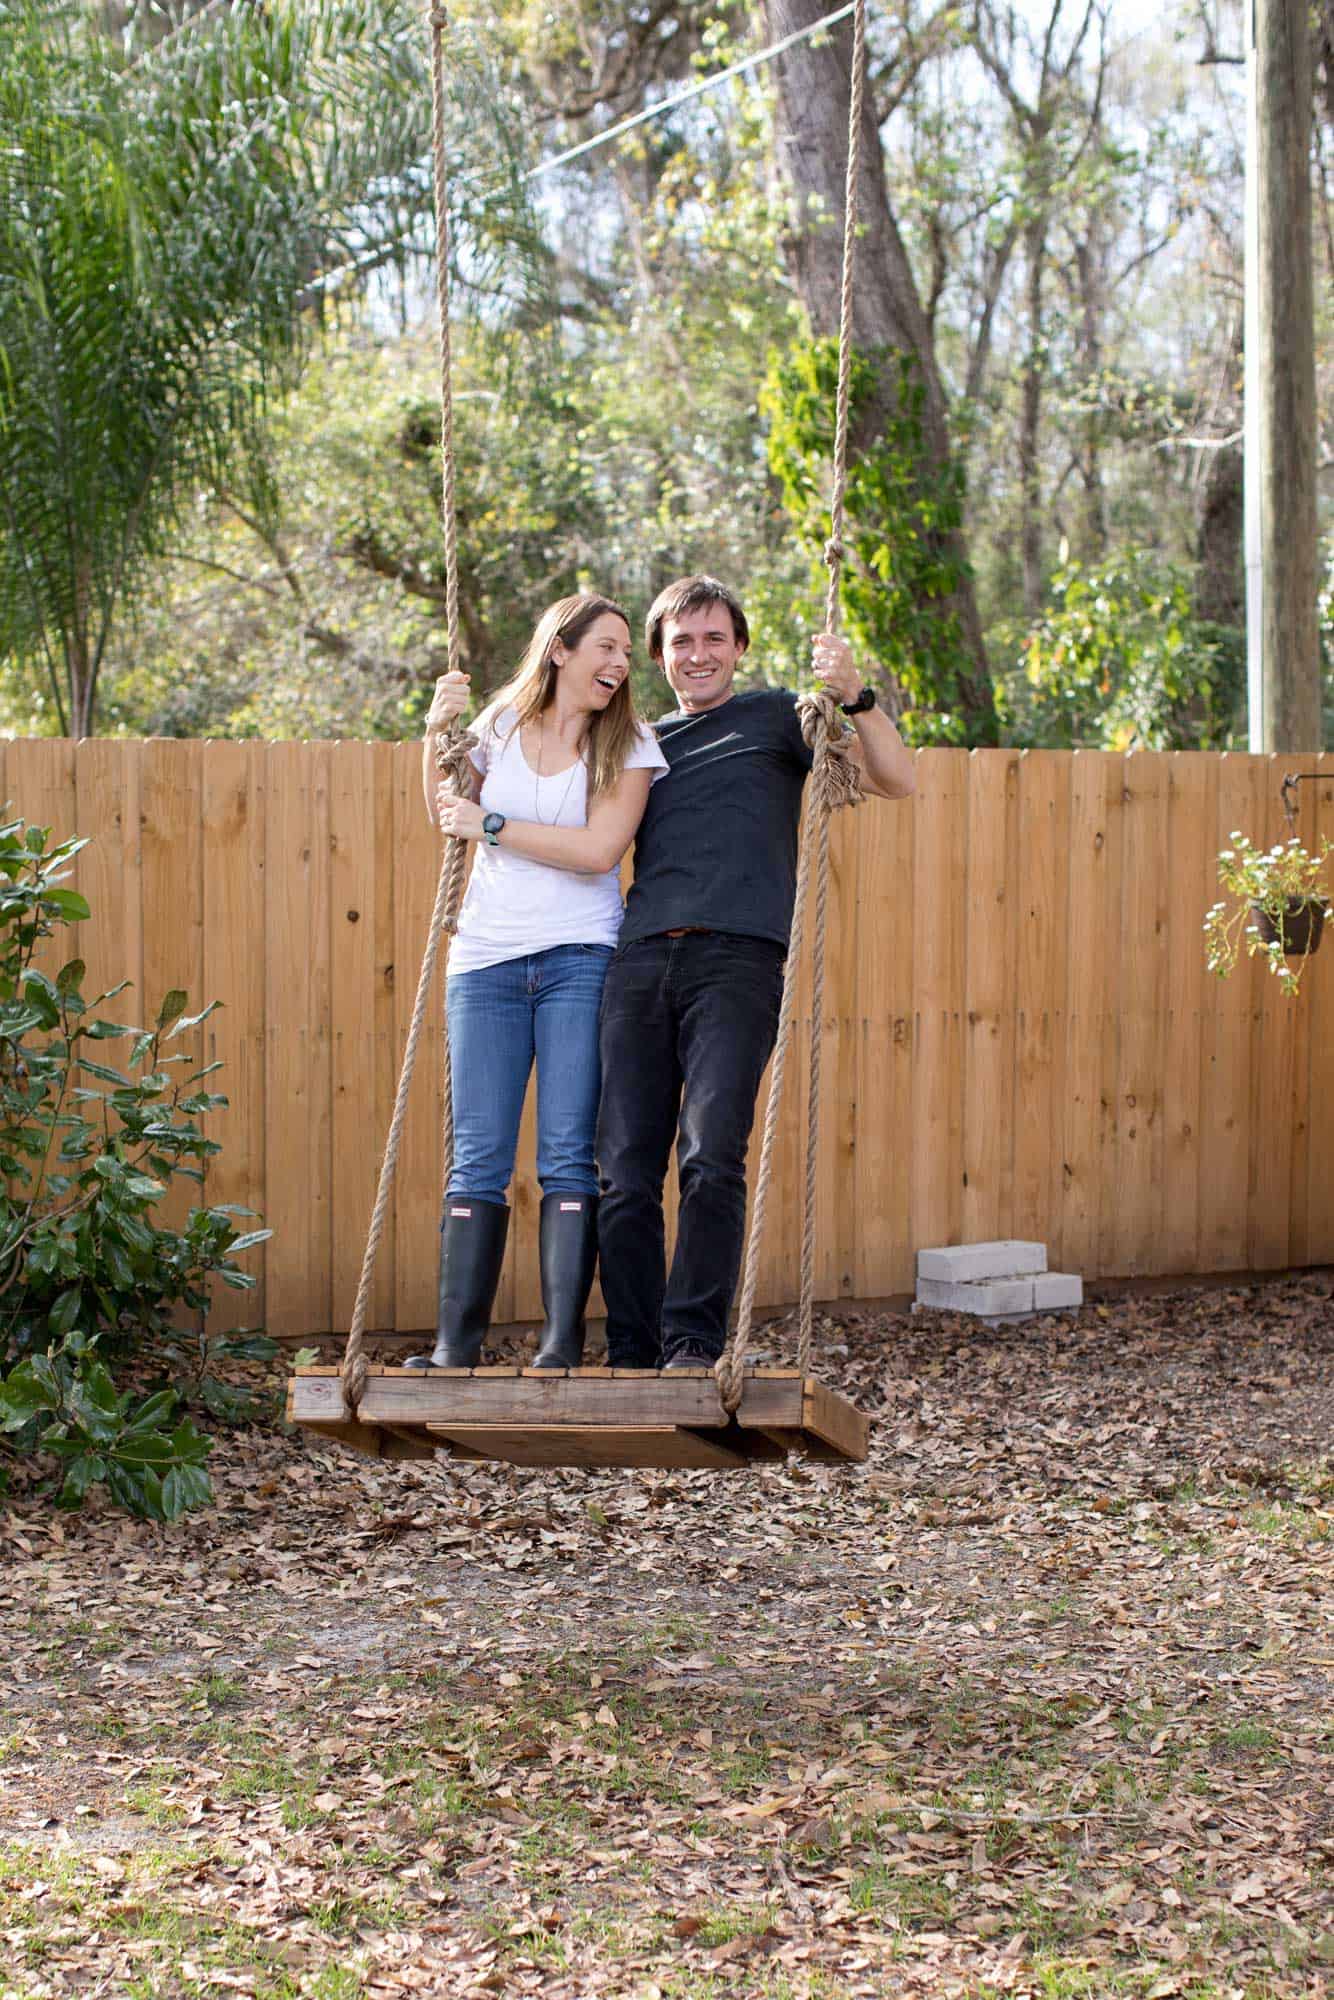 Jen and Ryan Hansard with DIY backyard swing